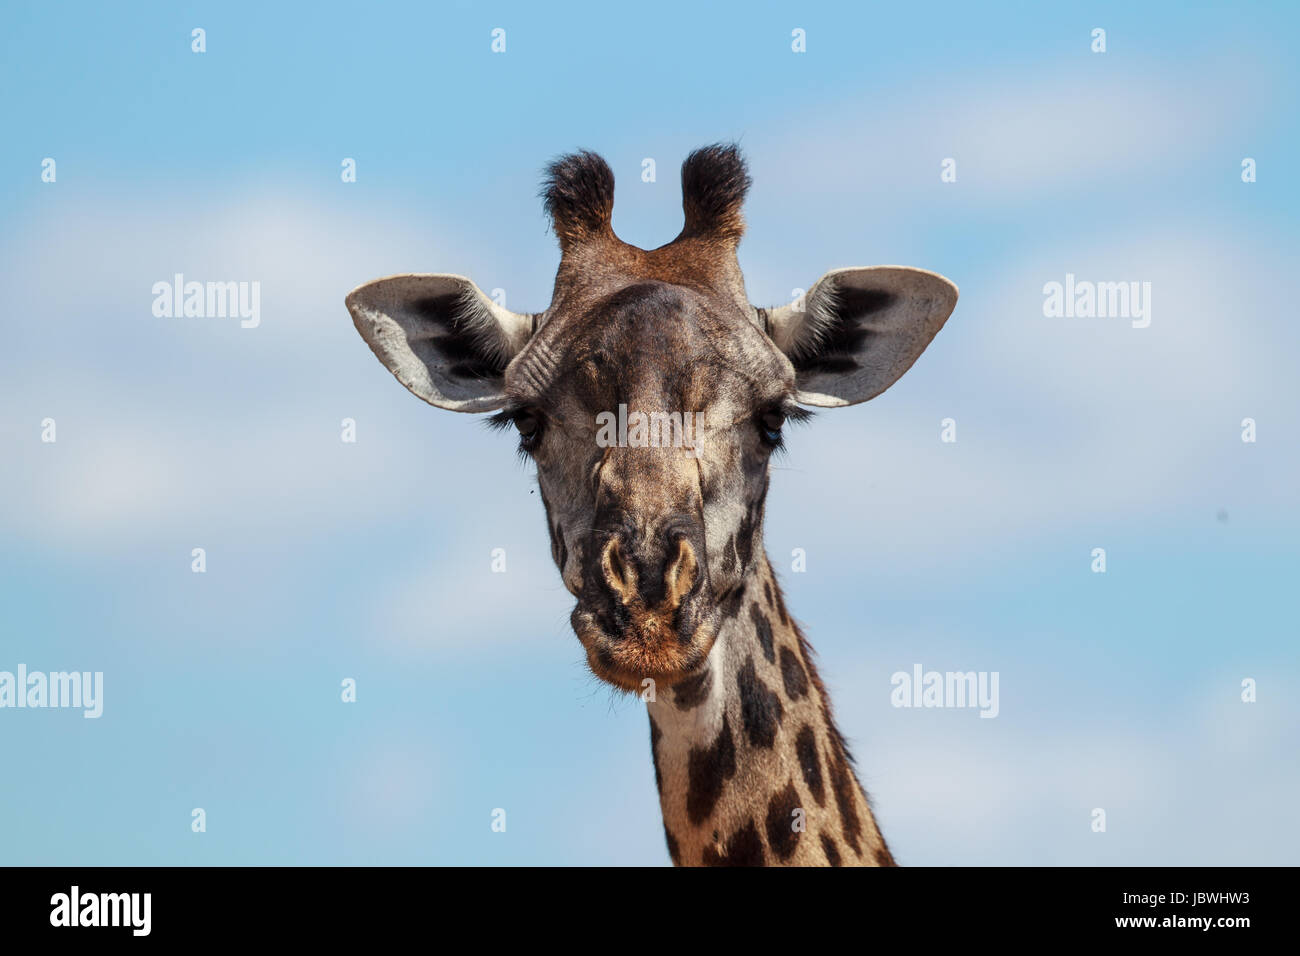 A portrait of a Masai Giraffe Stock Photo